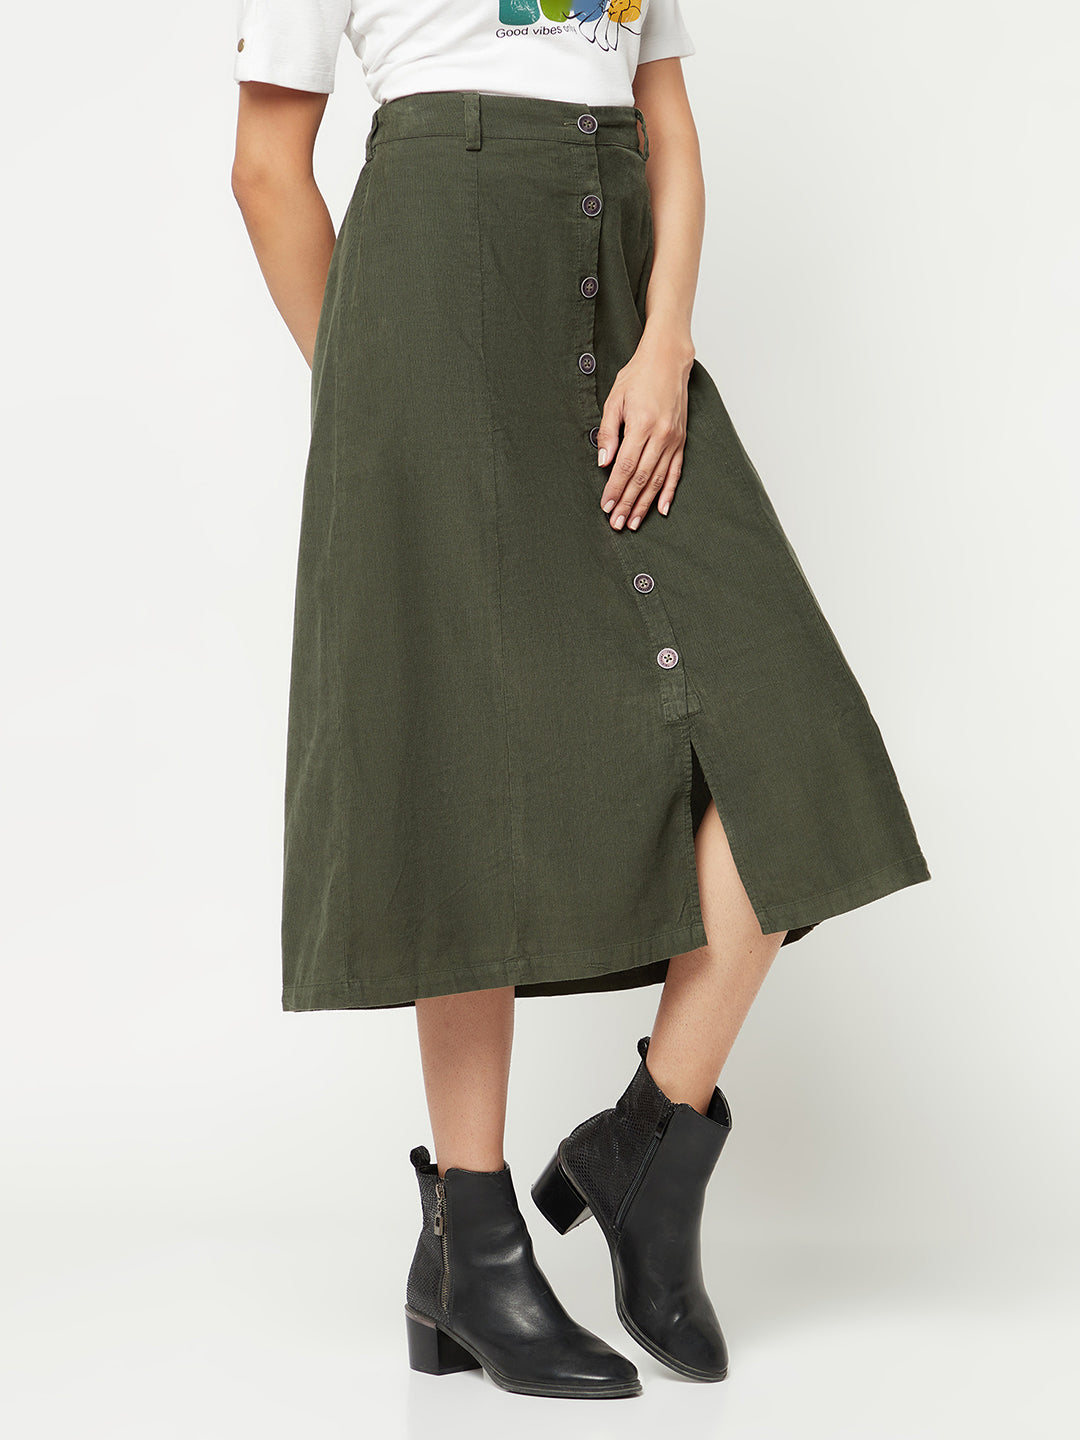  Olive Corduroy A-Line Skirt